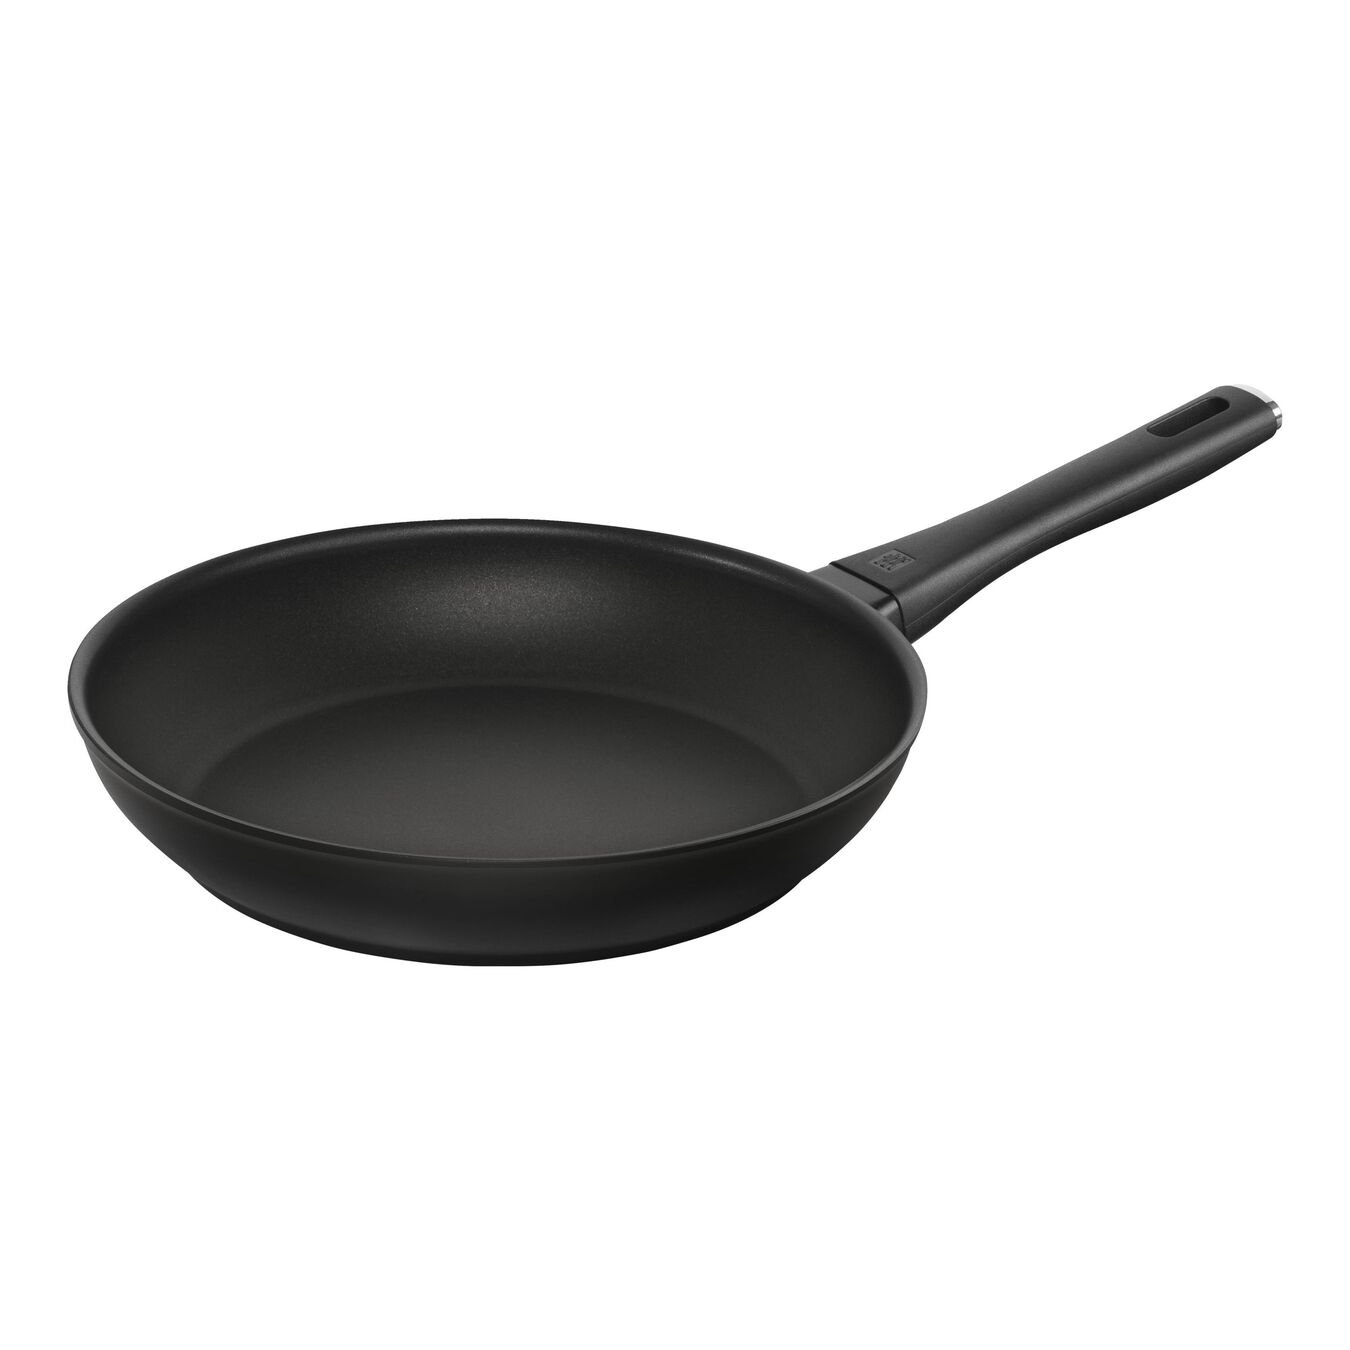 10-inch, Non-stick, Aluminum Fry Pan,,large 1